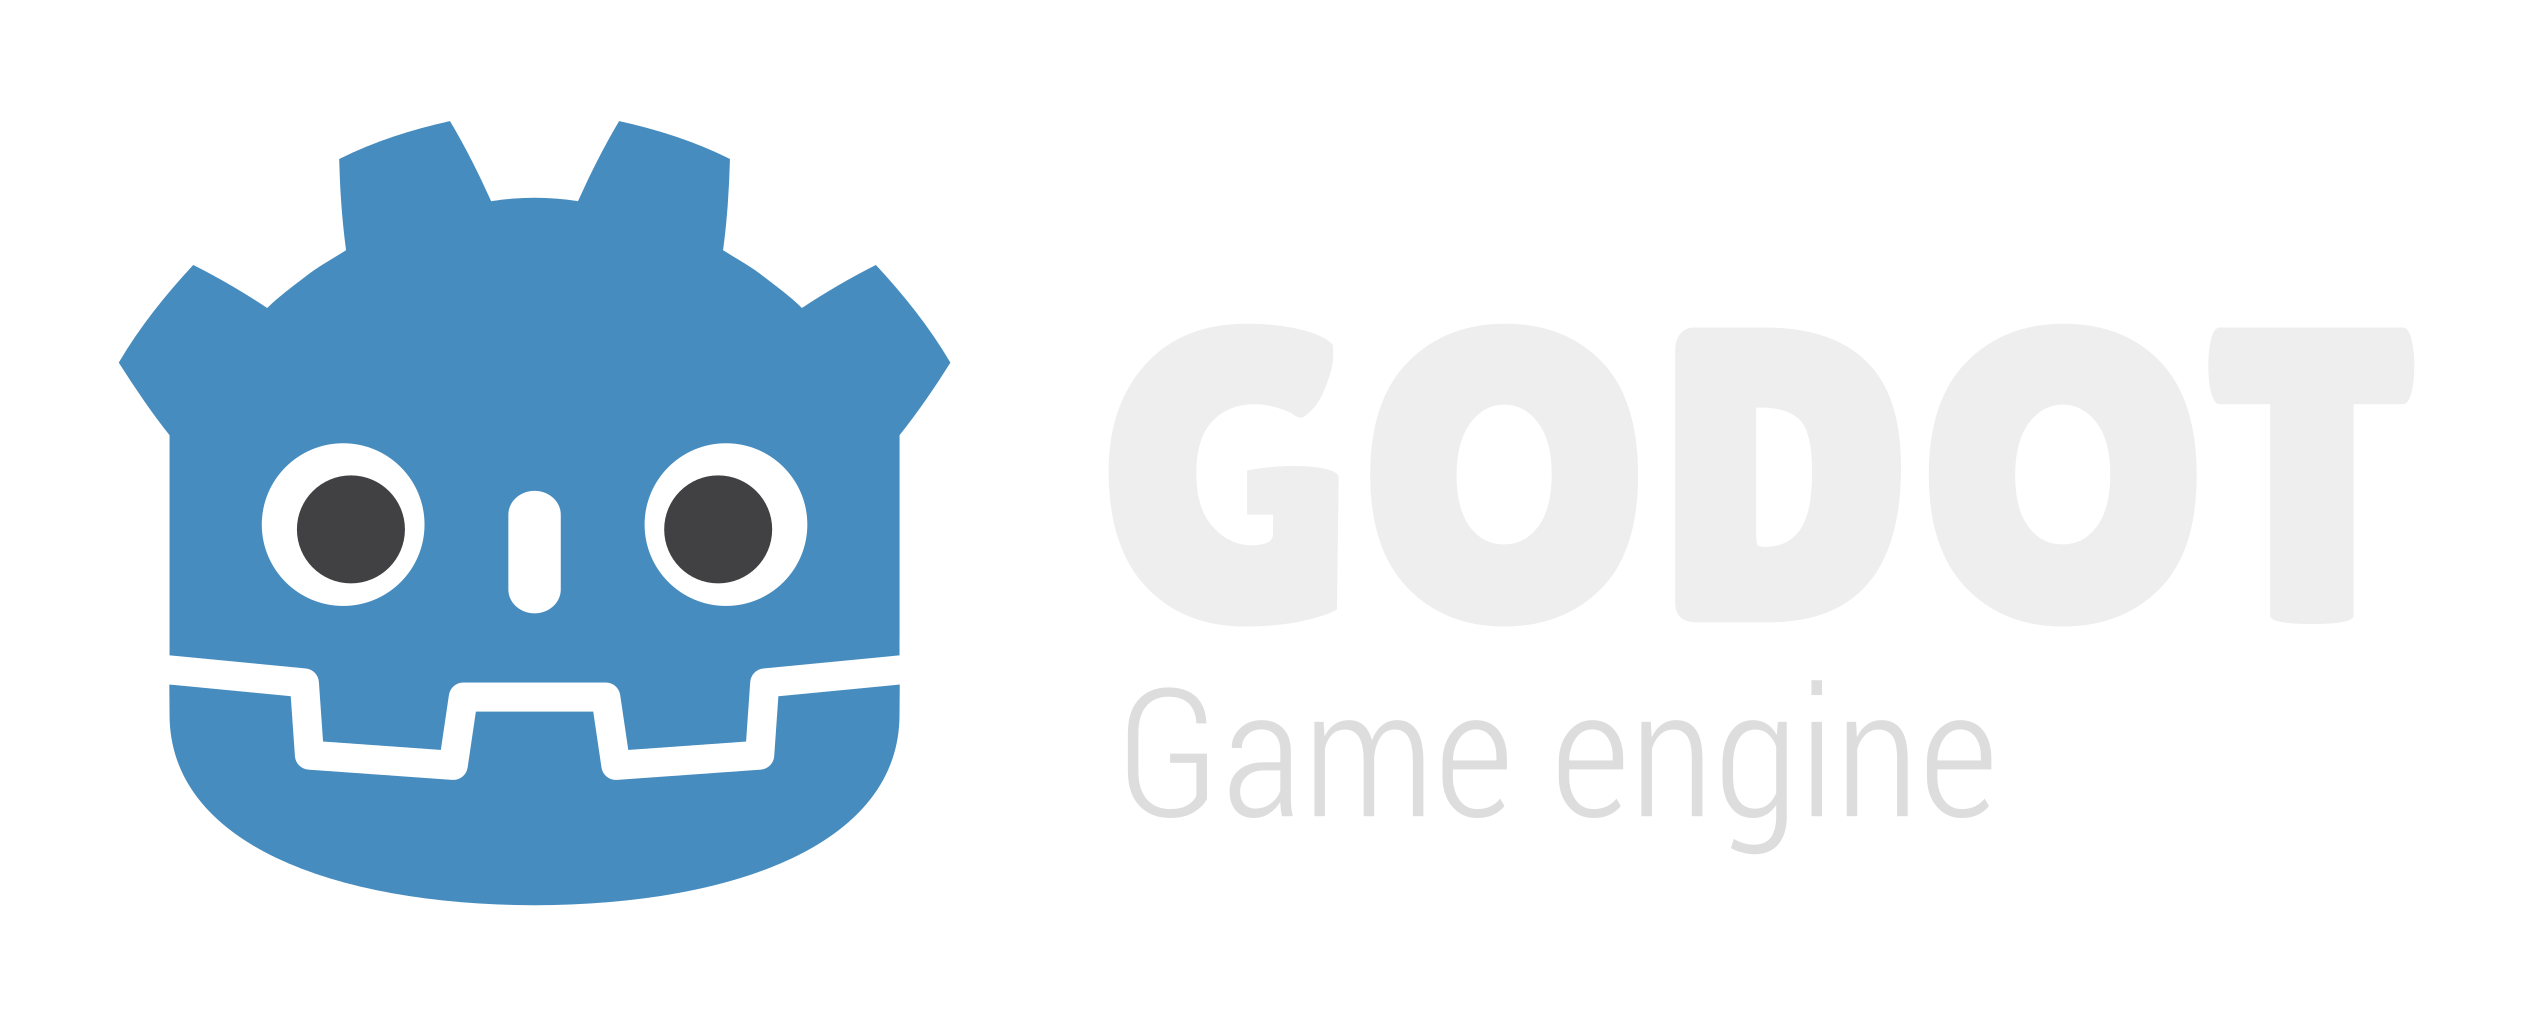 Godot Engine logo (colored for dark backgrounds)